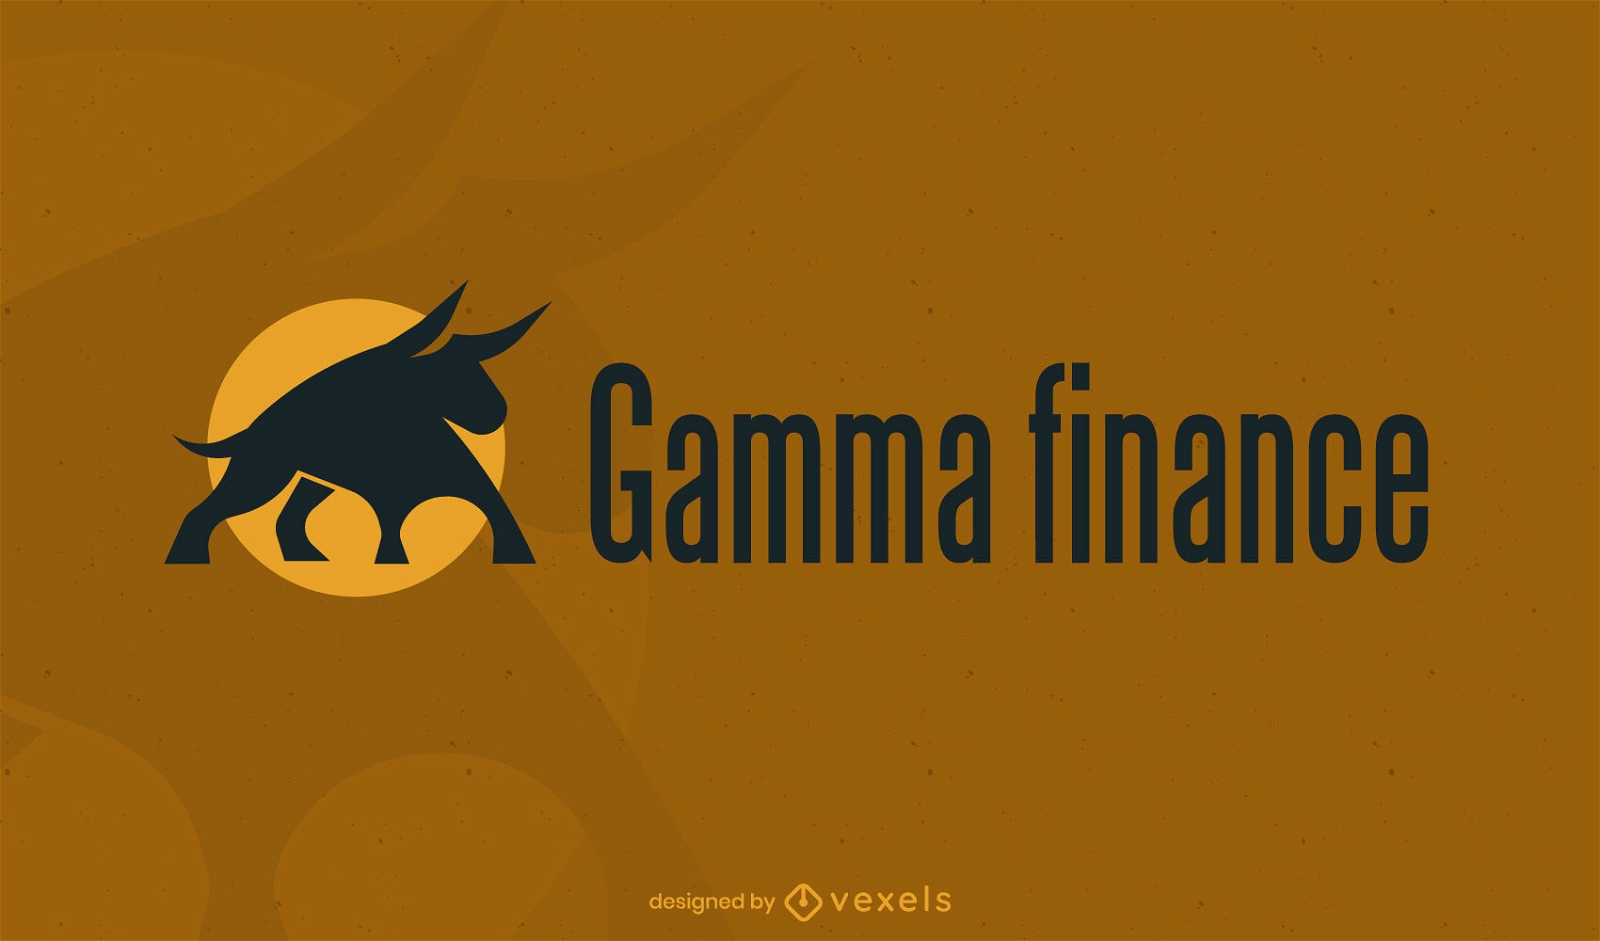 Bull finance logo template